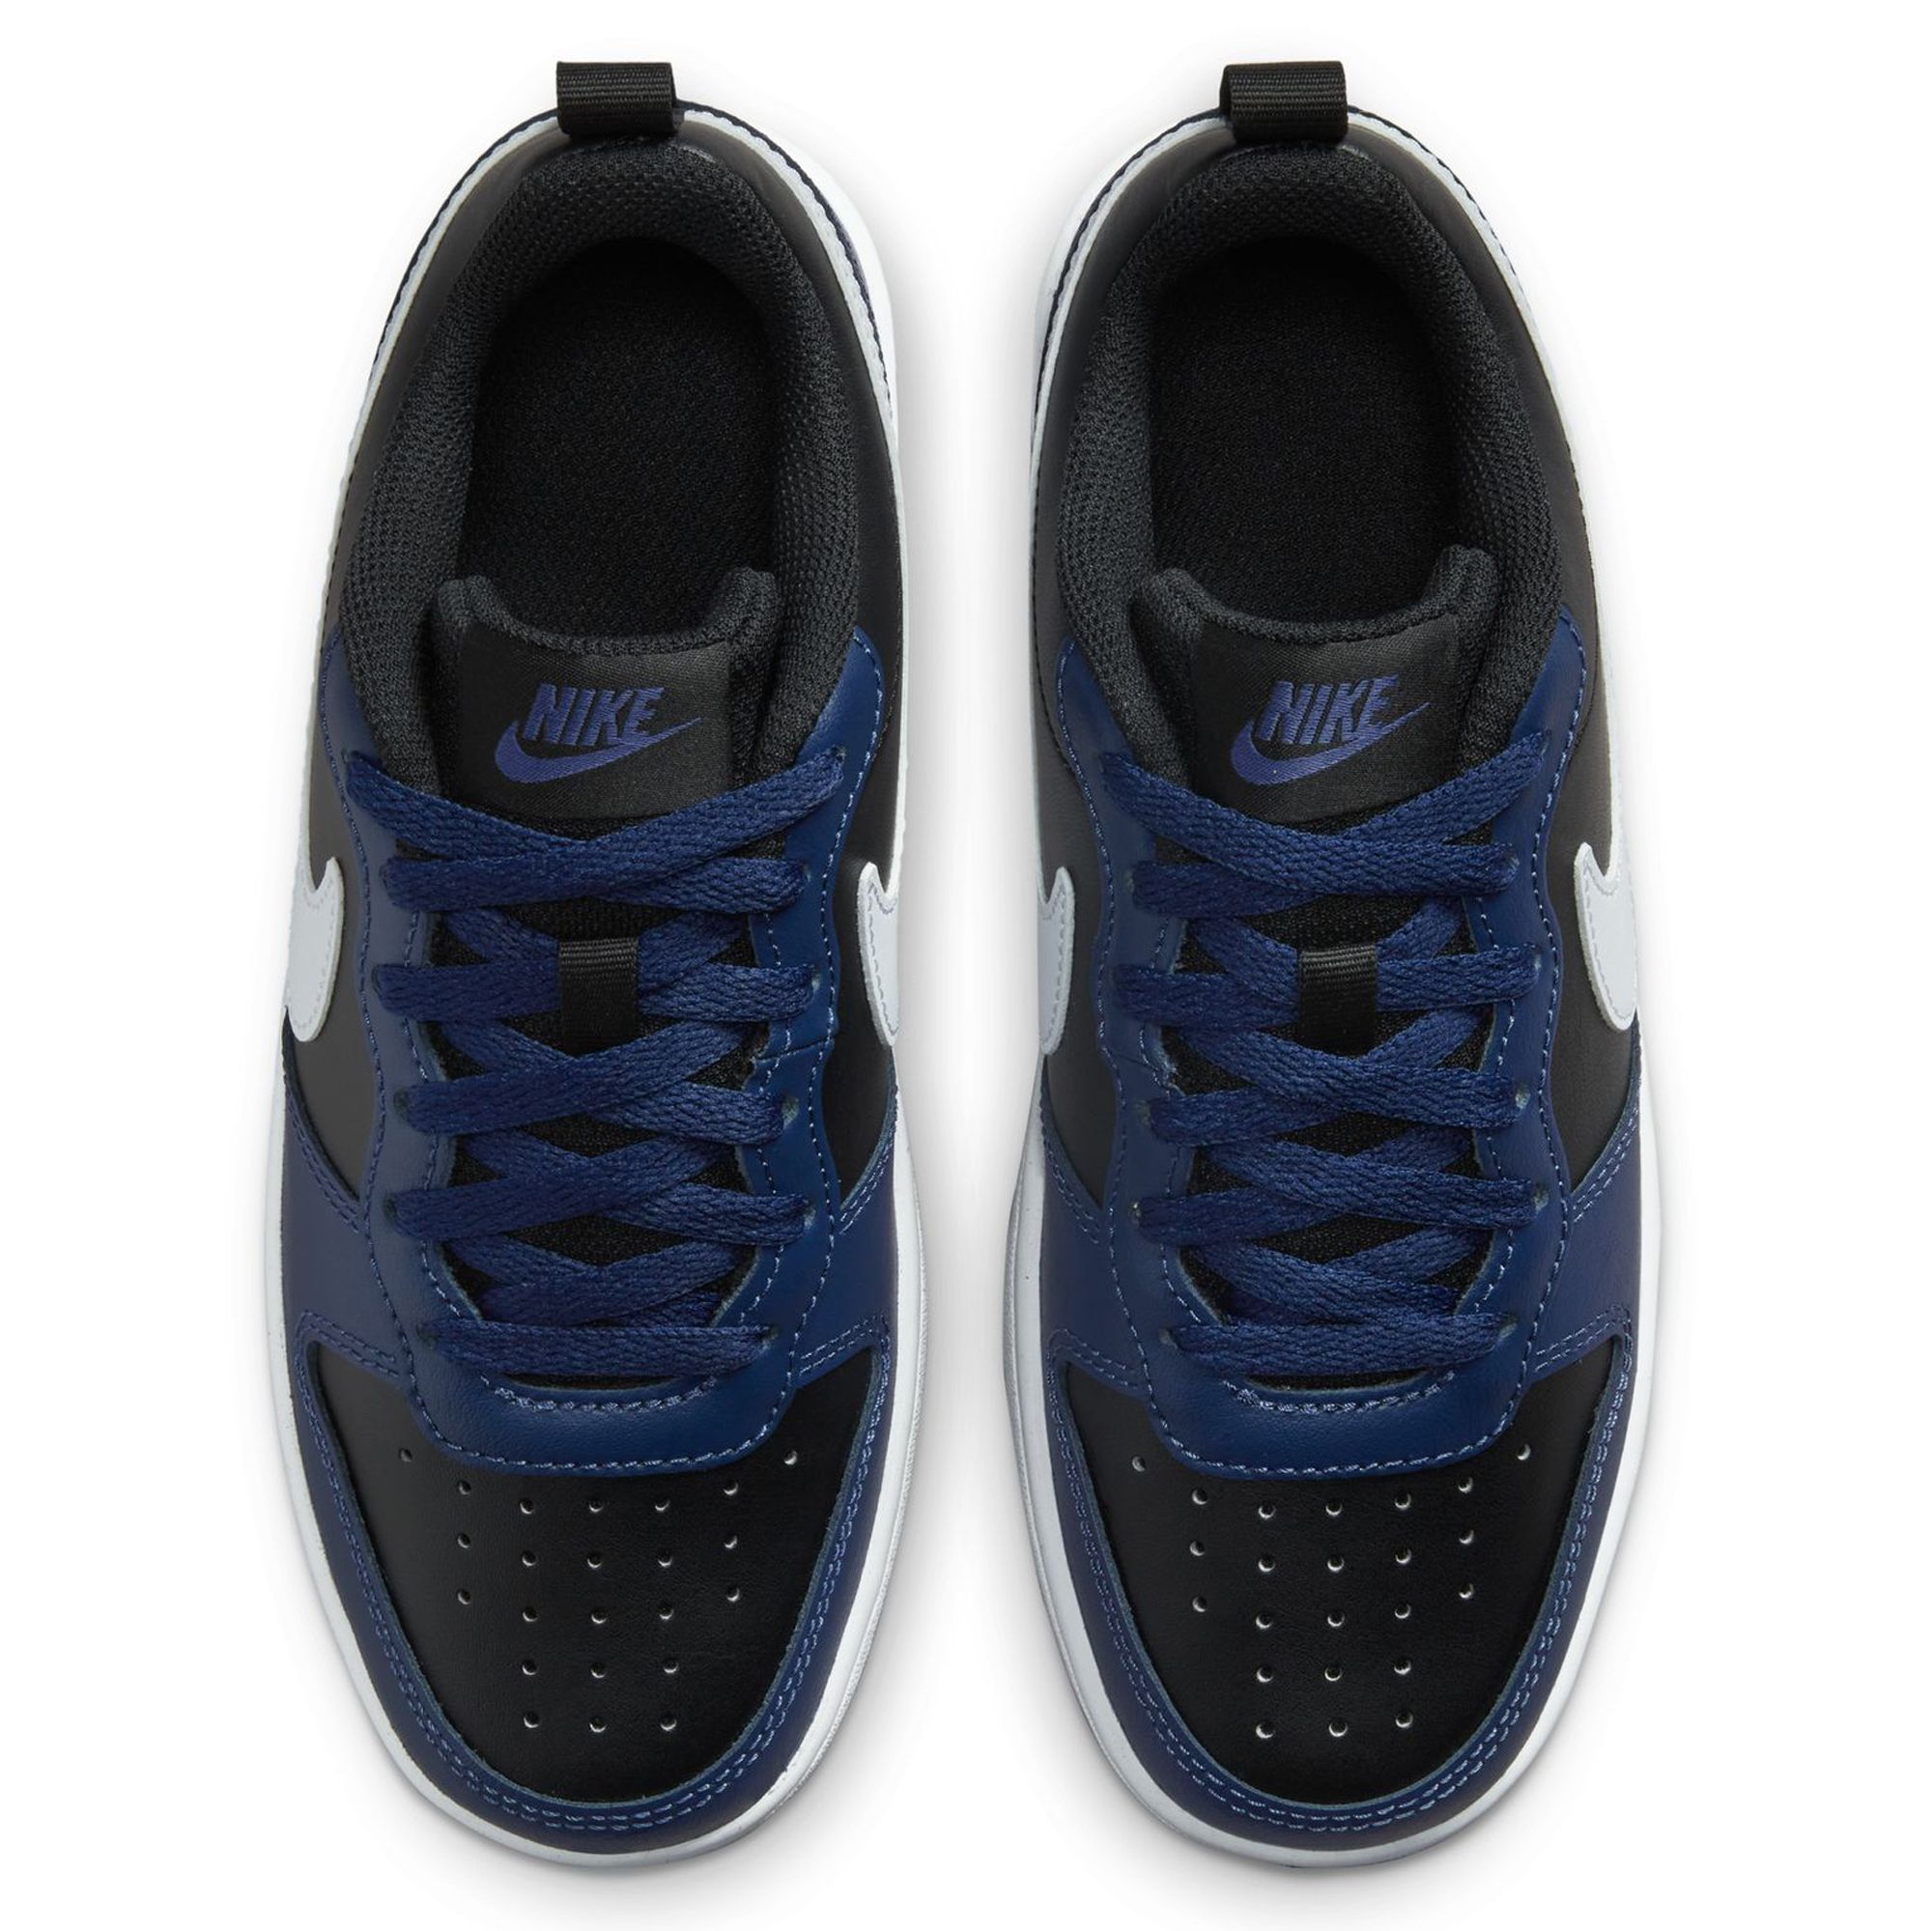 Nike Sportswear NIKE COURT BOROUGH LOW 2 (TD) - Baskets basses - midnight  navy/black/dark purple/dust white/bleu marine 